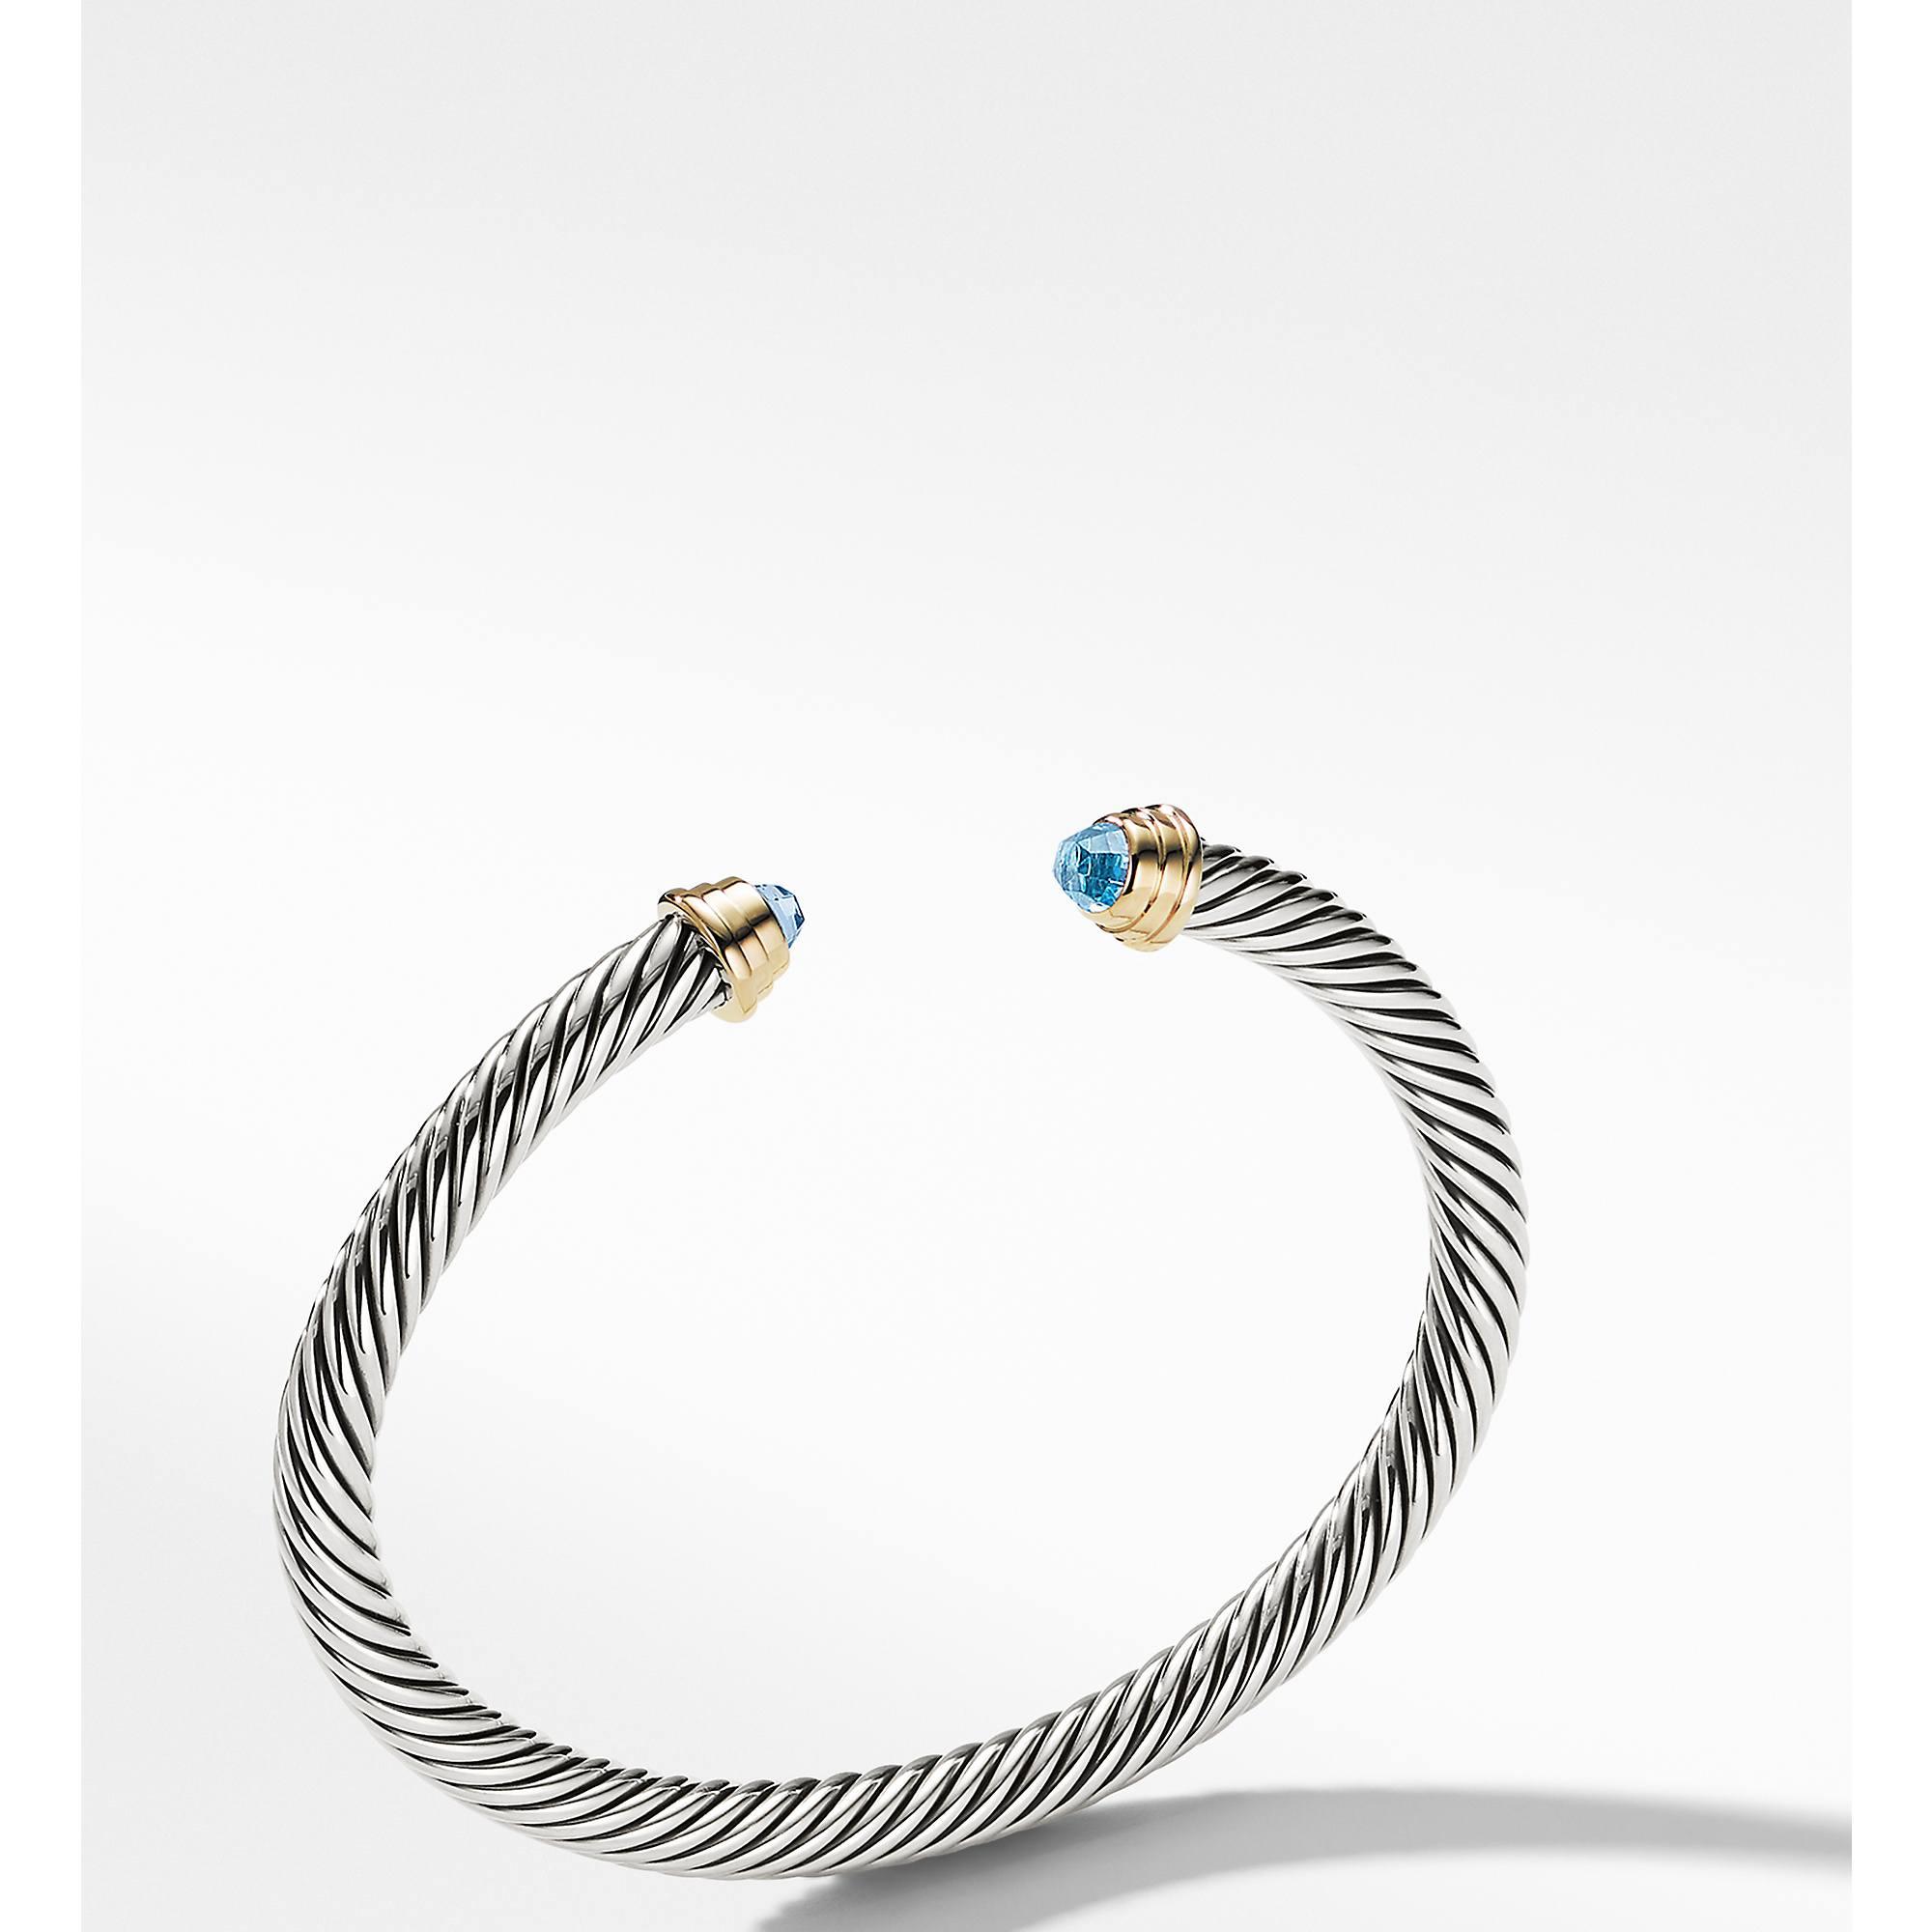 David Yurman Cable Kid's Birthstone Bracelet with Blue Topaz